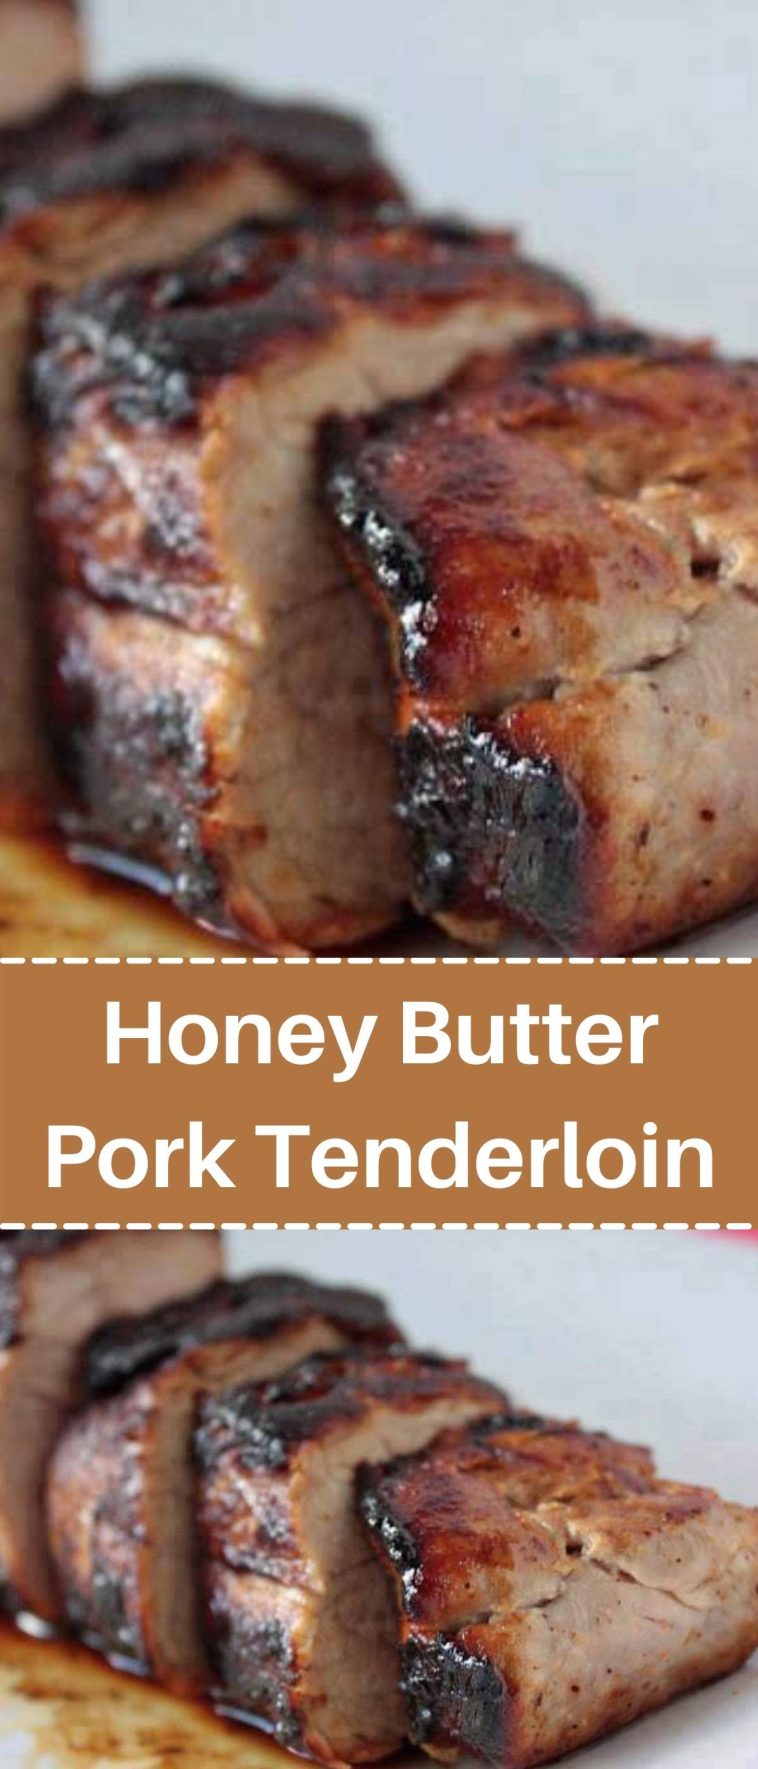 Honey Butter Pork Tenderloin